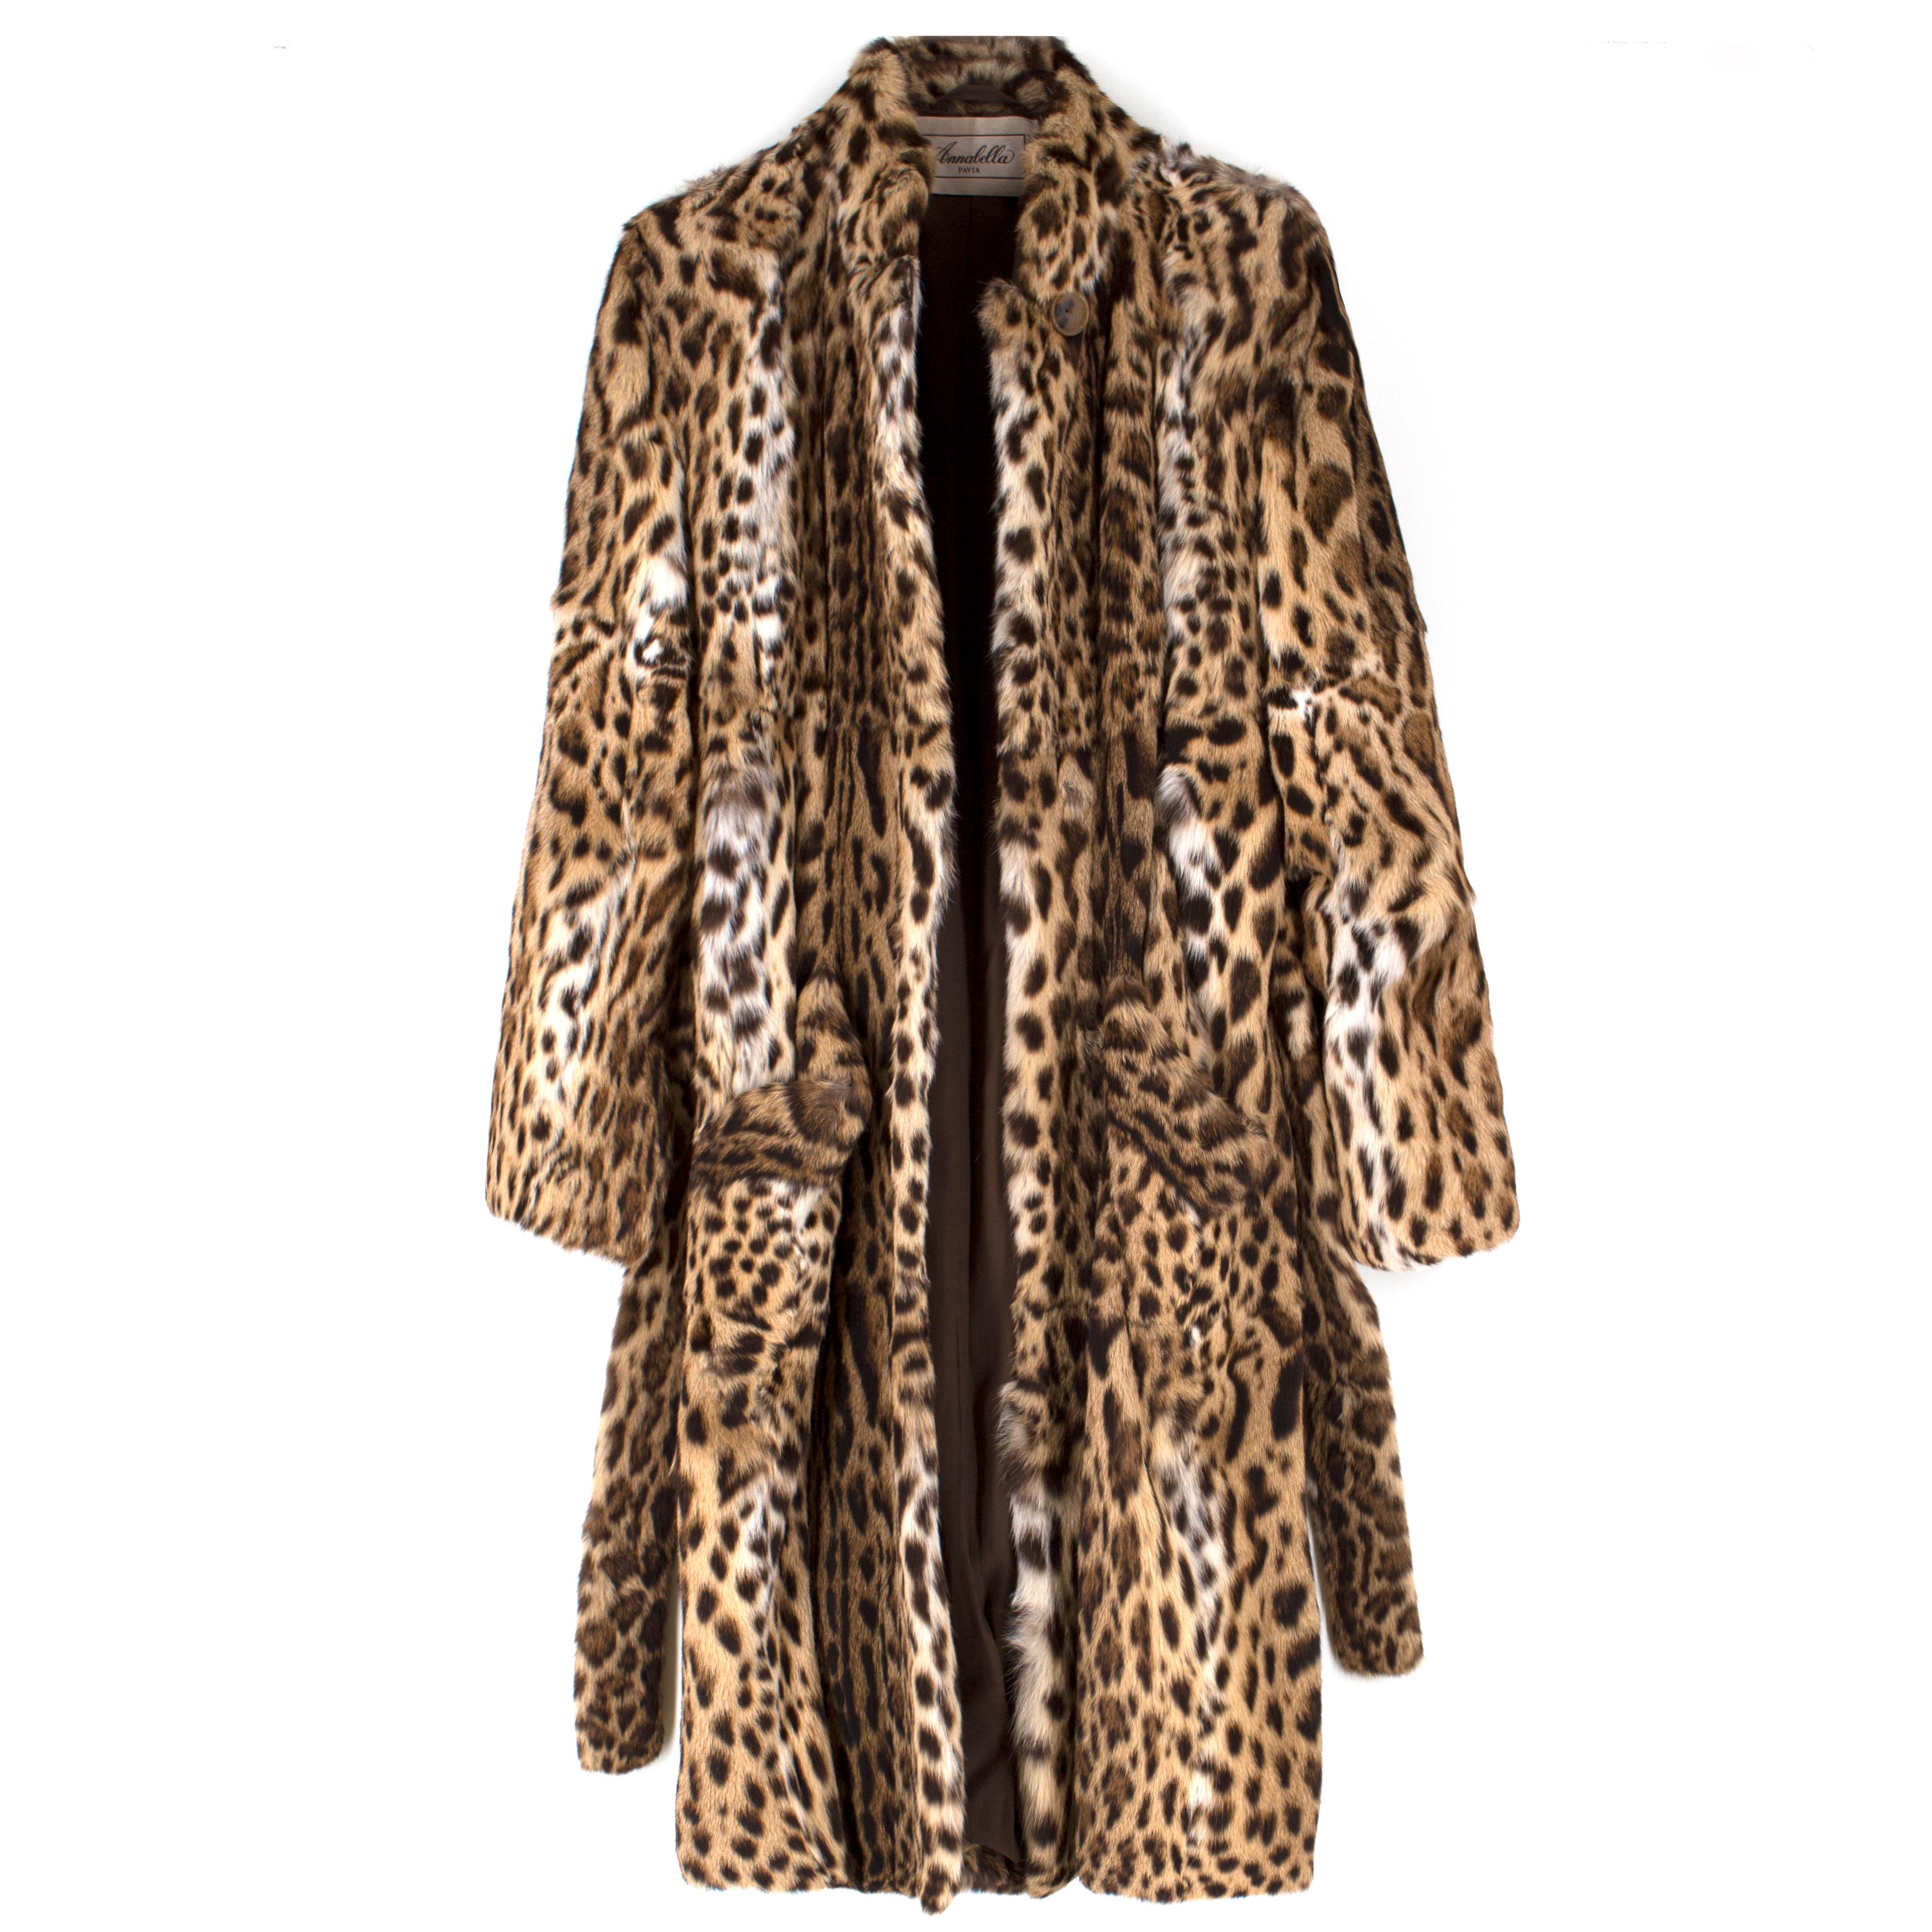  Annabella Pavia Lipicat Fur Coat US 8